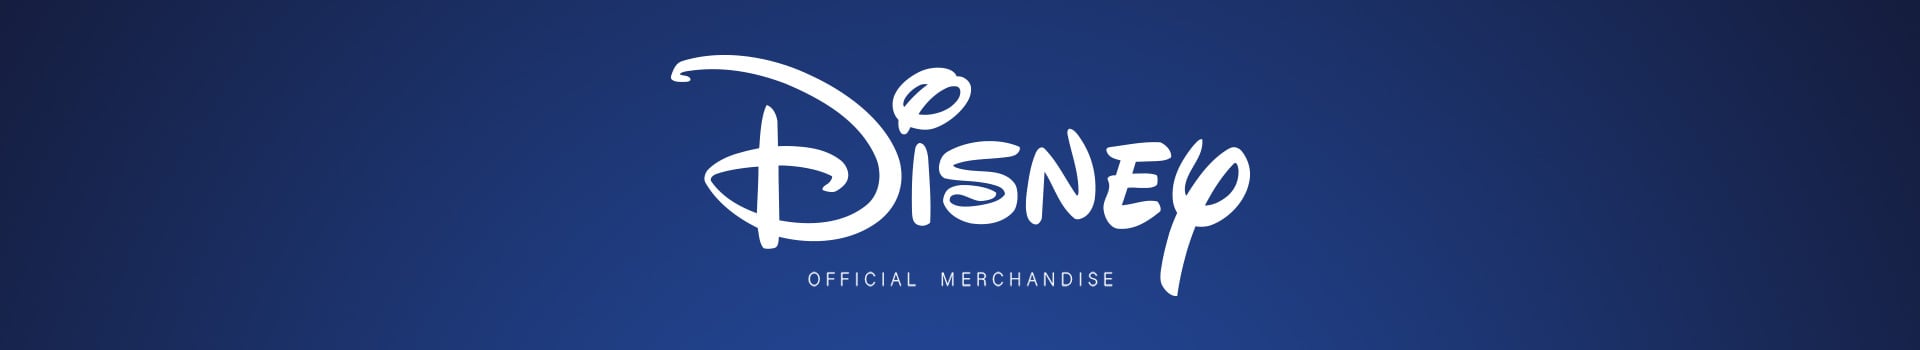 Disney - Official Merchandise